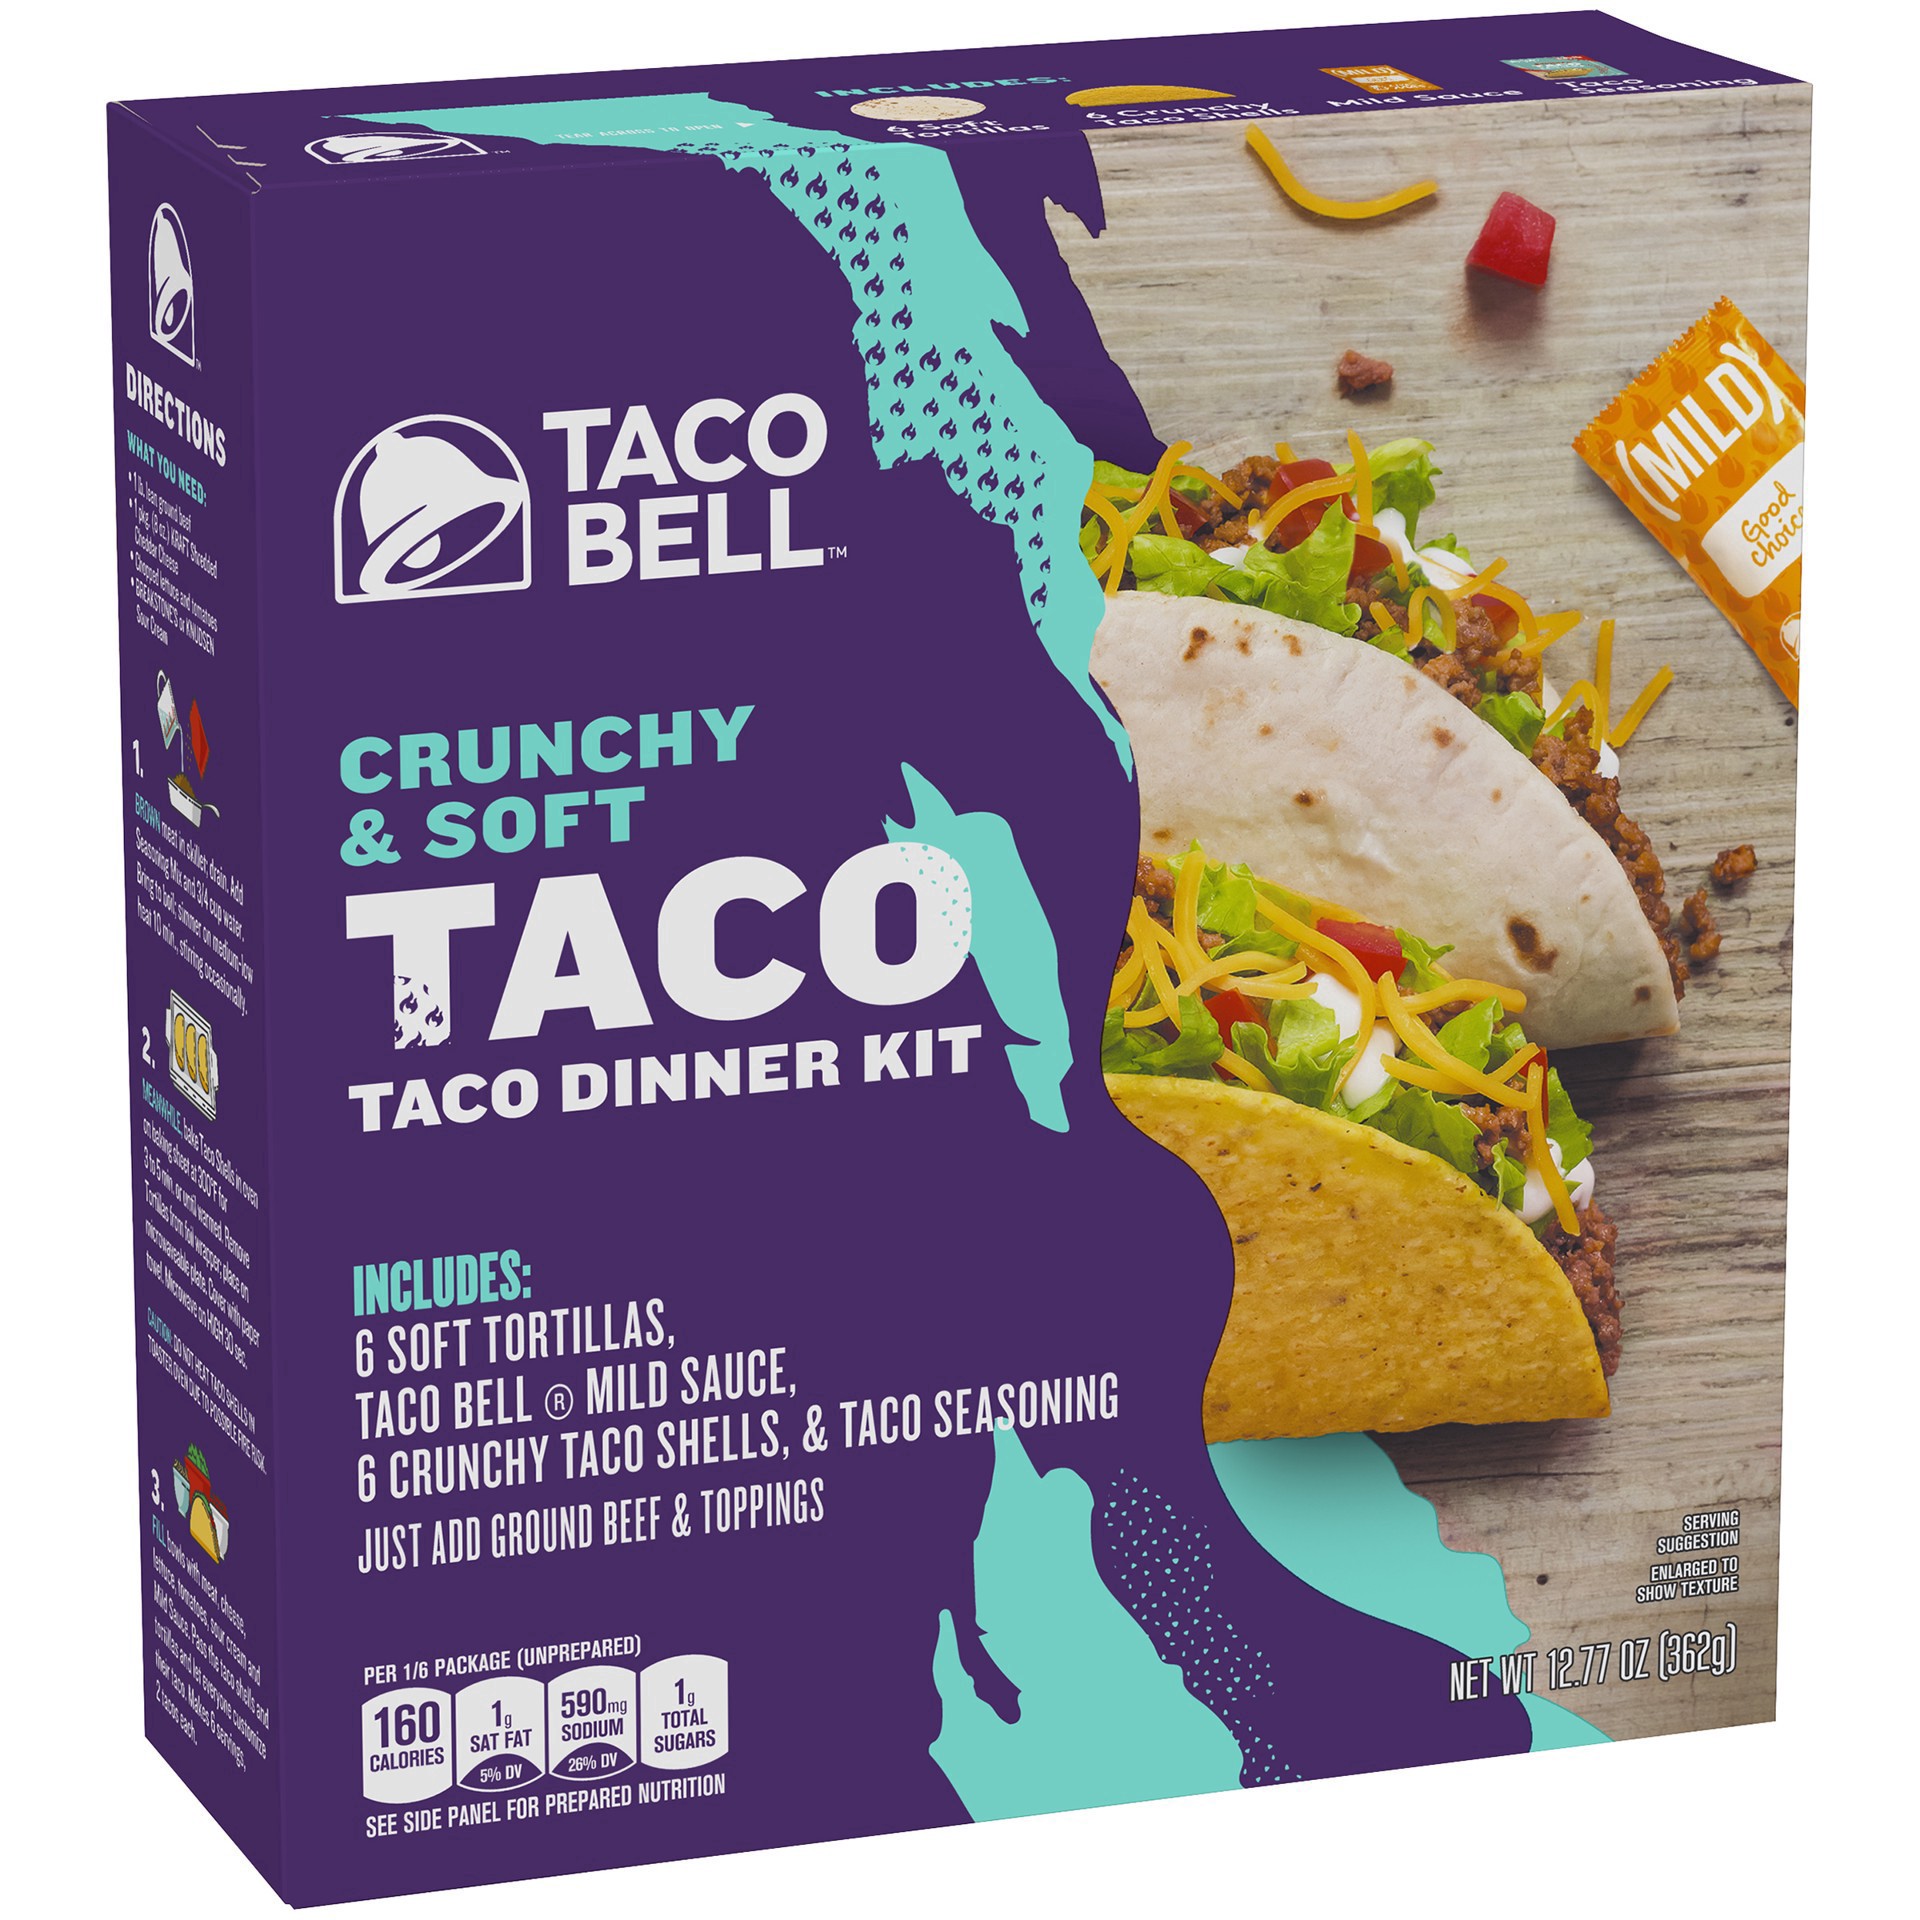 slide 67 of 101, Taco Bell Crunchy & Soft Taco Cravings Kit with 6 Soft Tortillas, 6 Crunchy Taco Shells, Taco Bell Mild Sauce & Seasoning, 12.77 oz Box, 1 ct